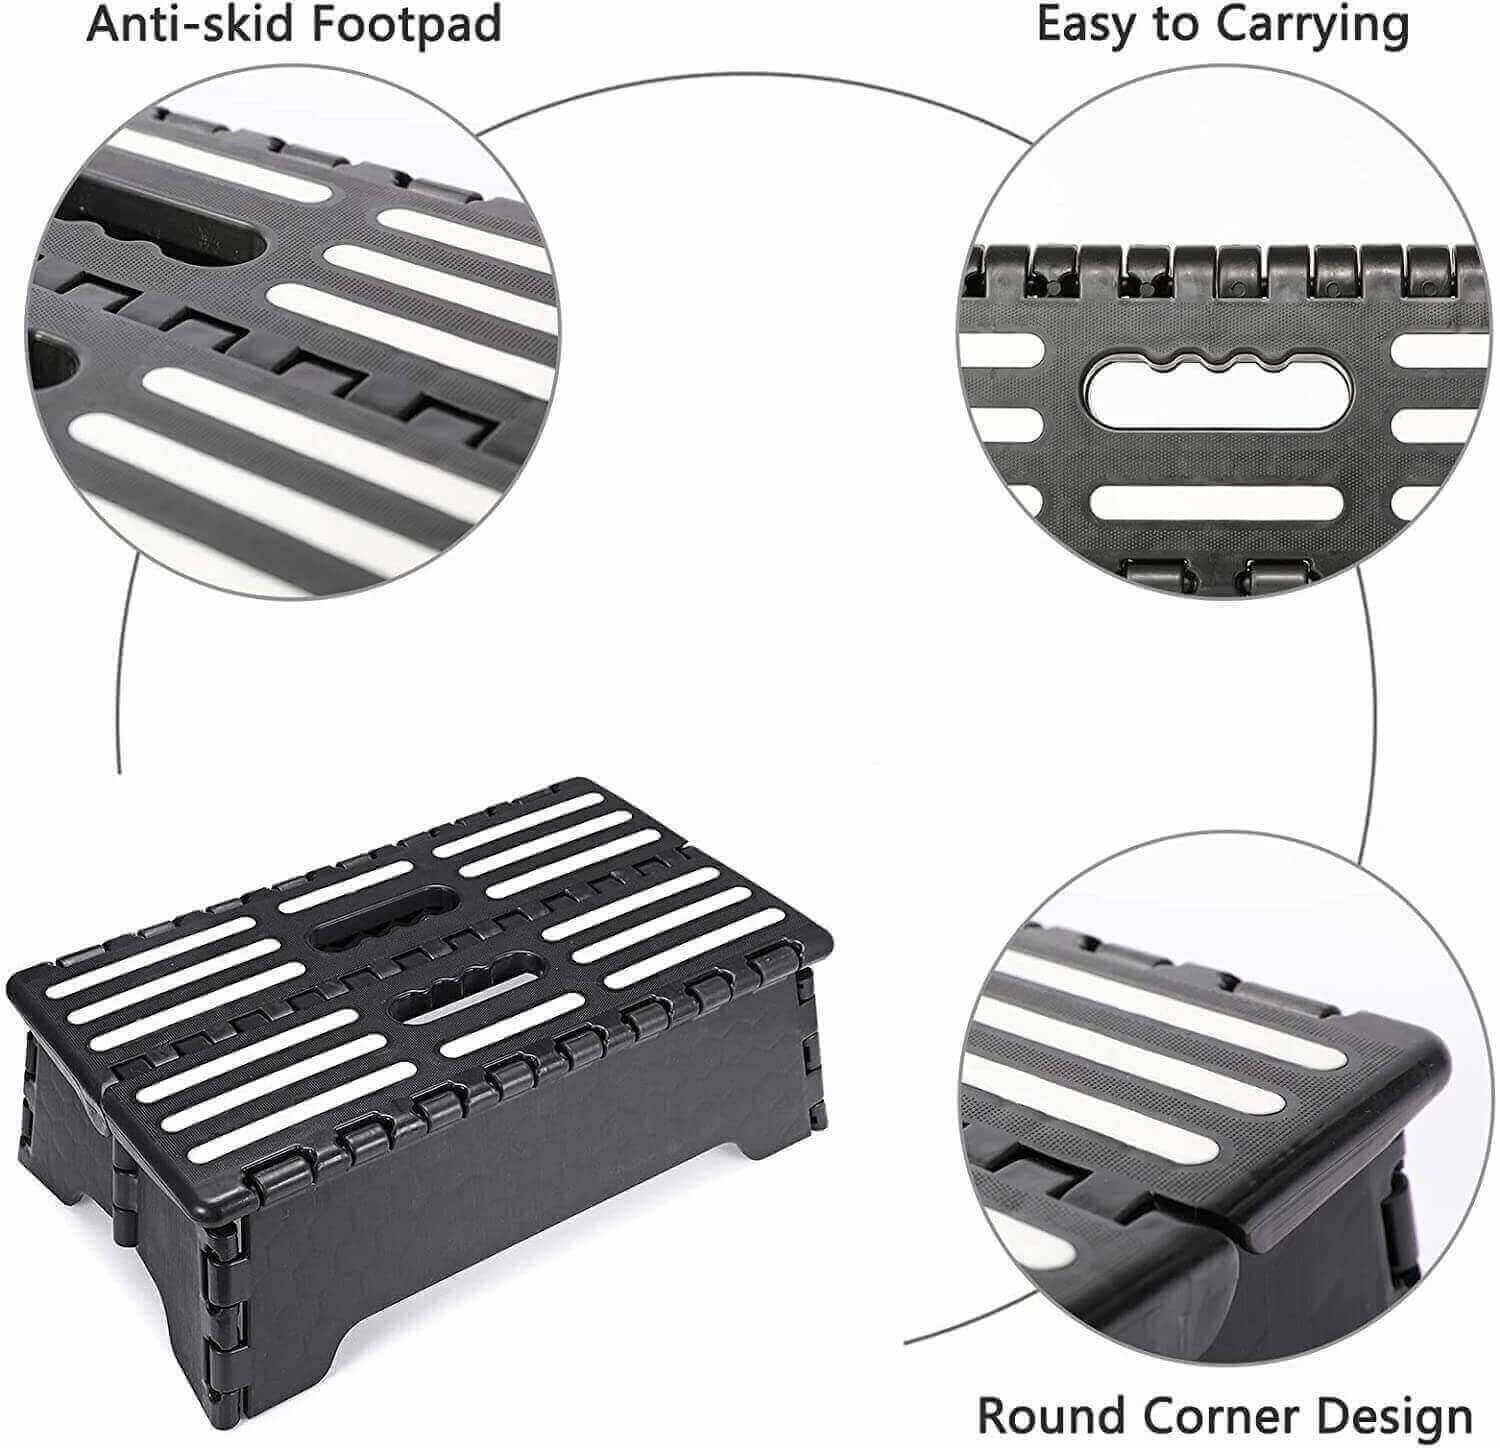 Lightweight plastic folding step stool in black, portability